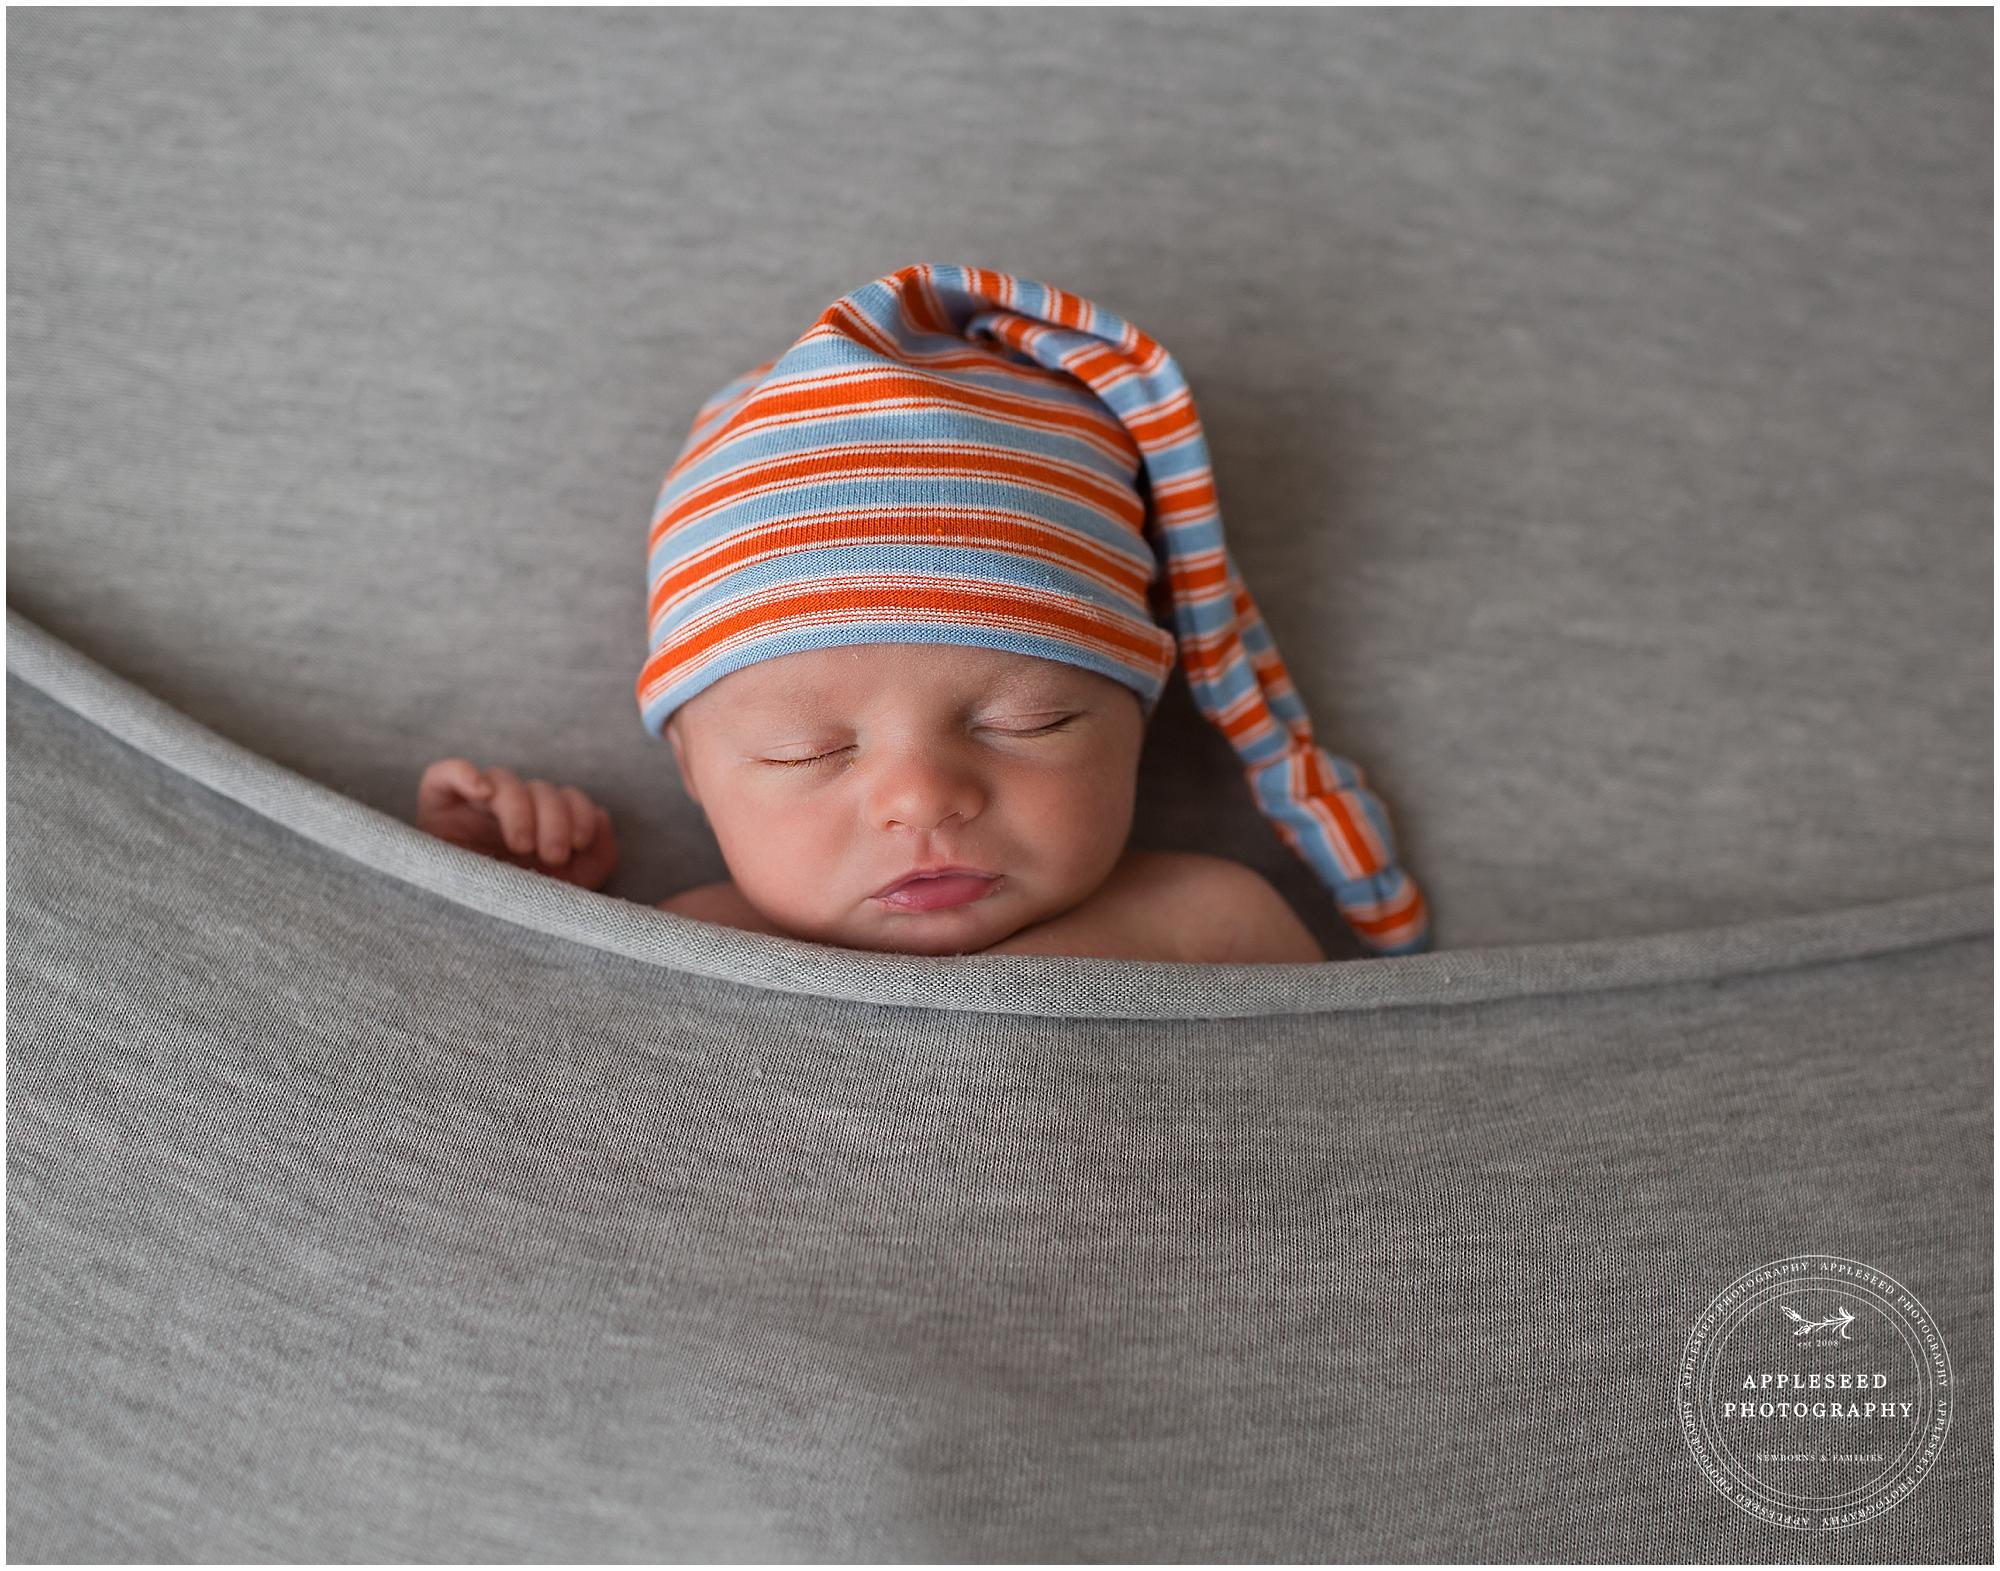 Newborn Photographer Atlanta | Harry | Appleseed Photography